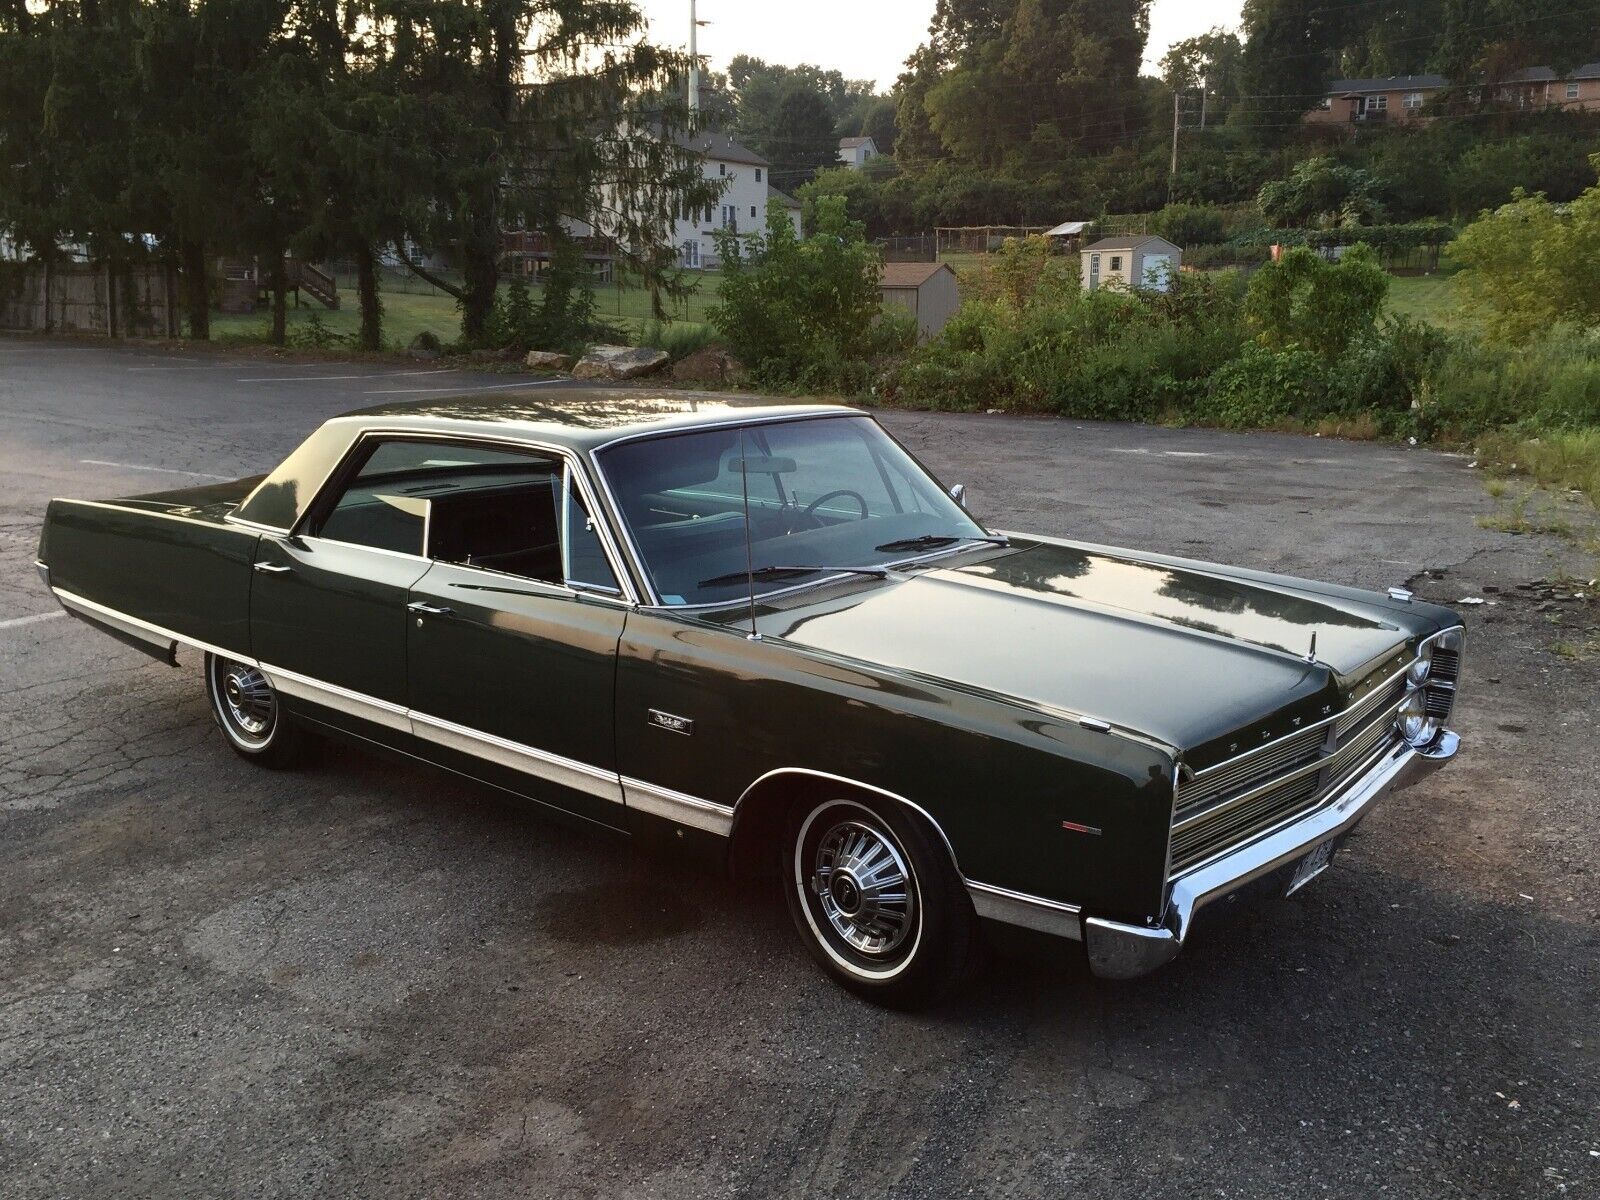 This 1967 Plymouth Fury Vip Is A Stunning Survivor Ebay Motors Blog